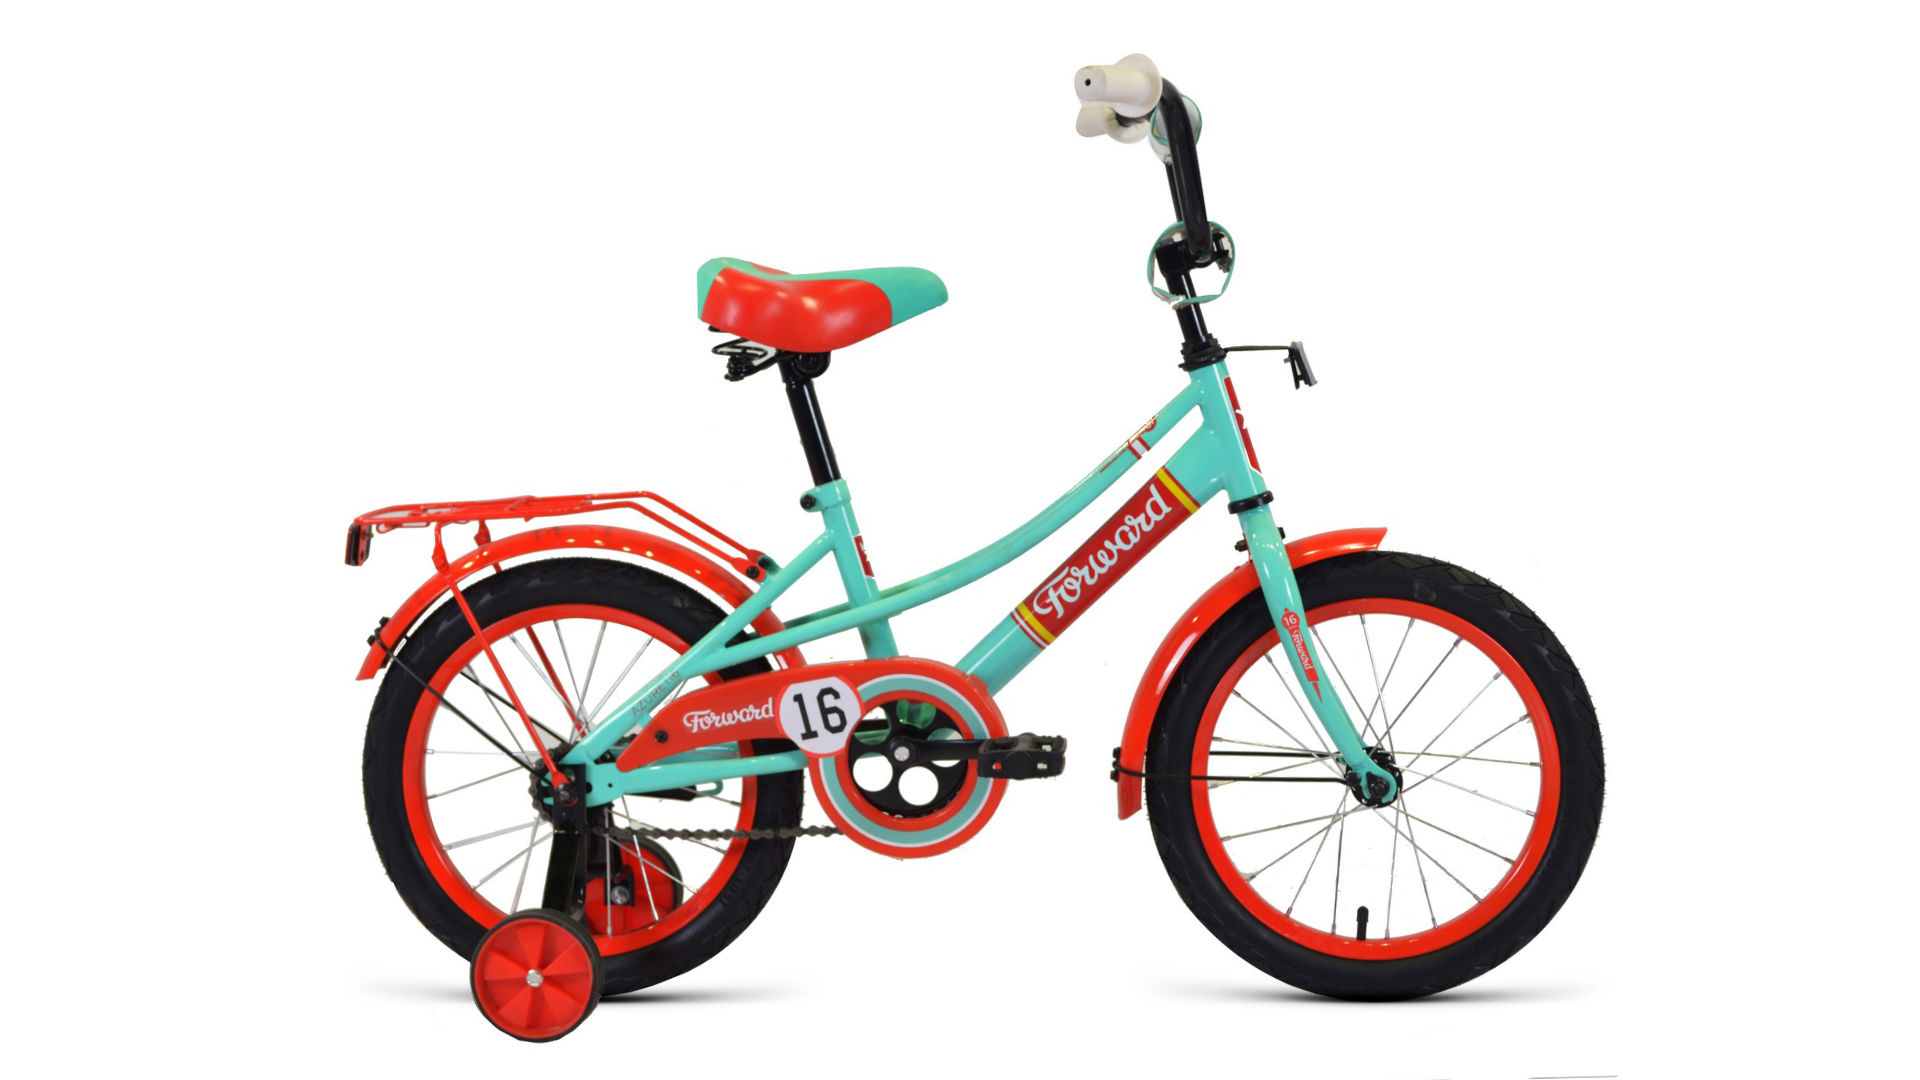 Велосипед Forward Azure 16 2021 Зеленый/красный 1BKW1K1C1027 велосипед forward azure 16 2021 зеленый красный 1bkw1k1c1027